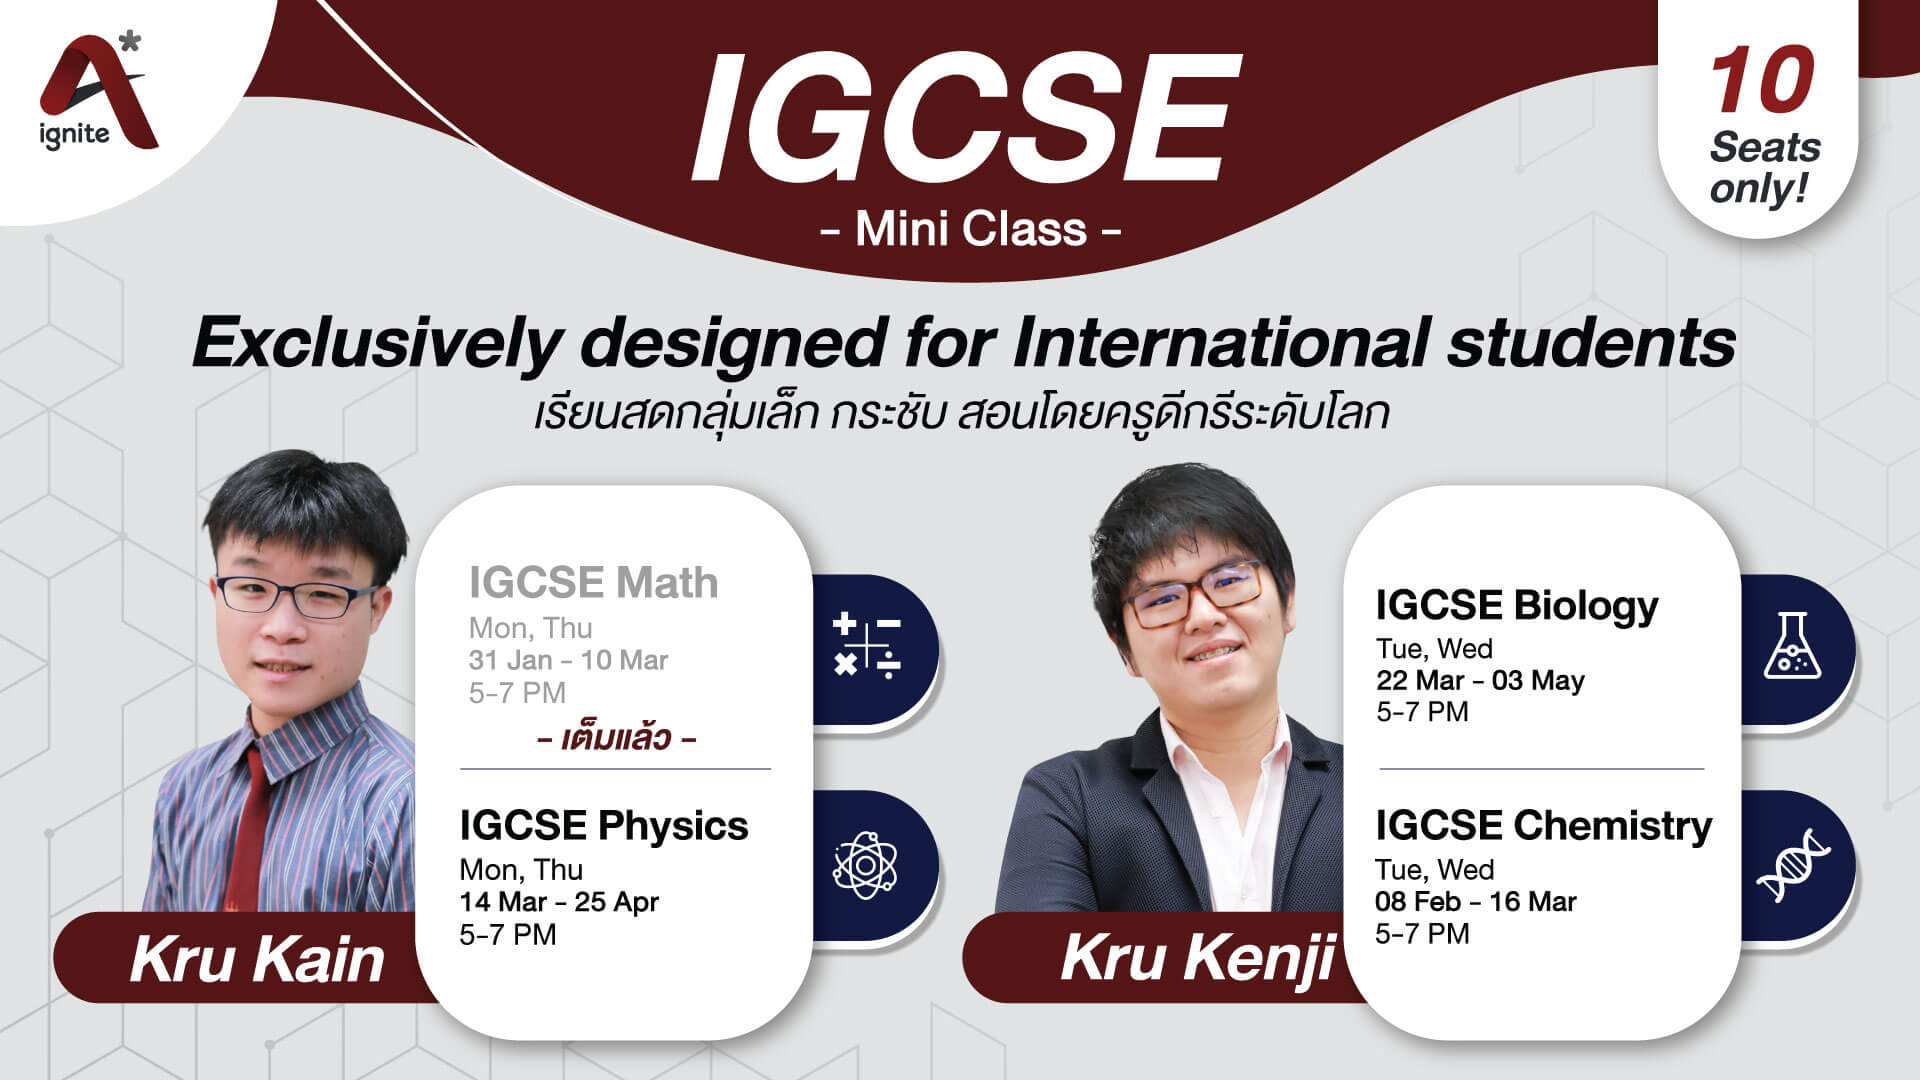 IGCSE mini class by Kenji and Kain.